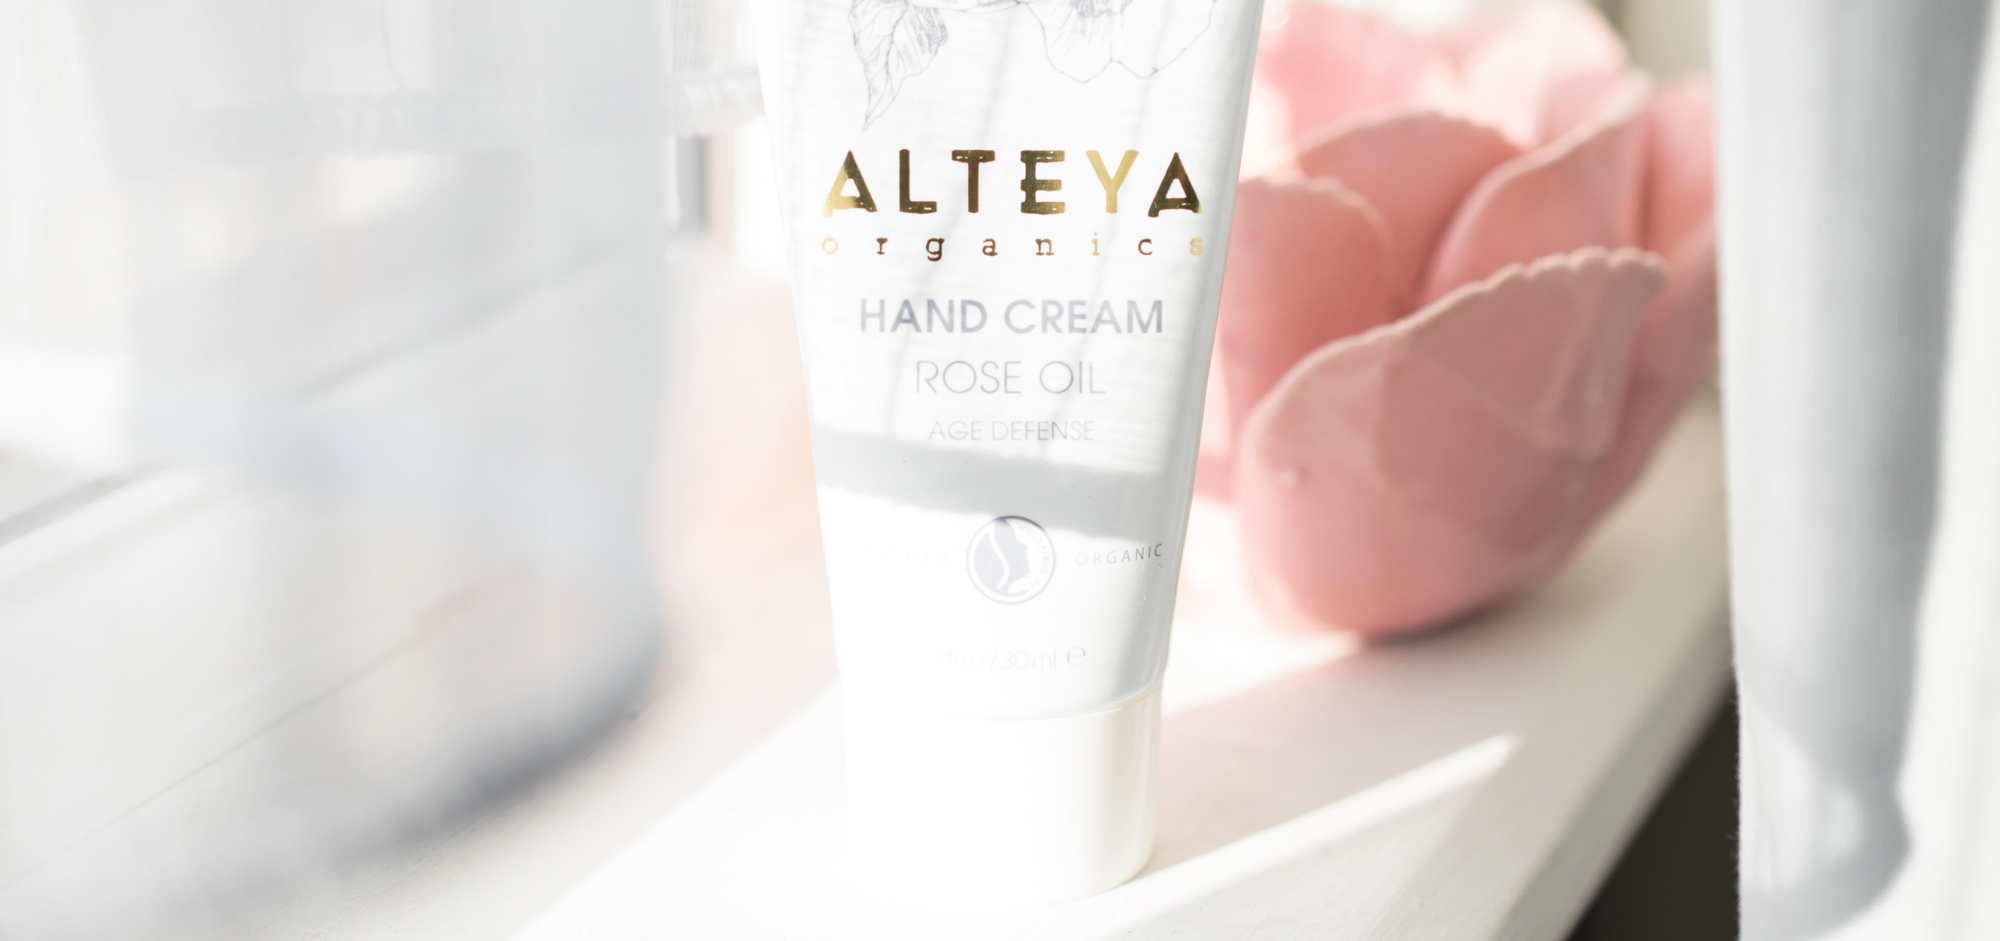 Alteya Organics Hand Cream